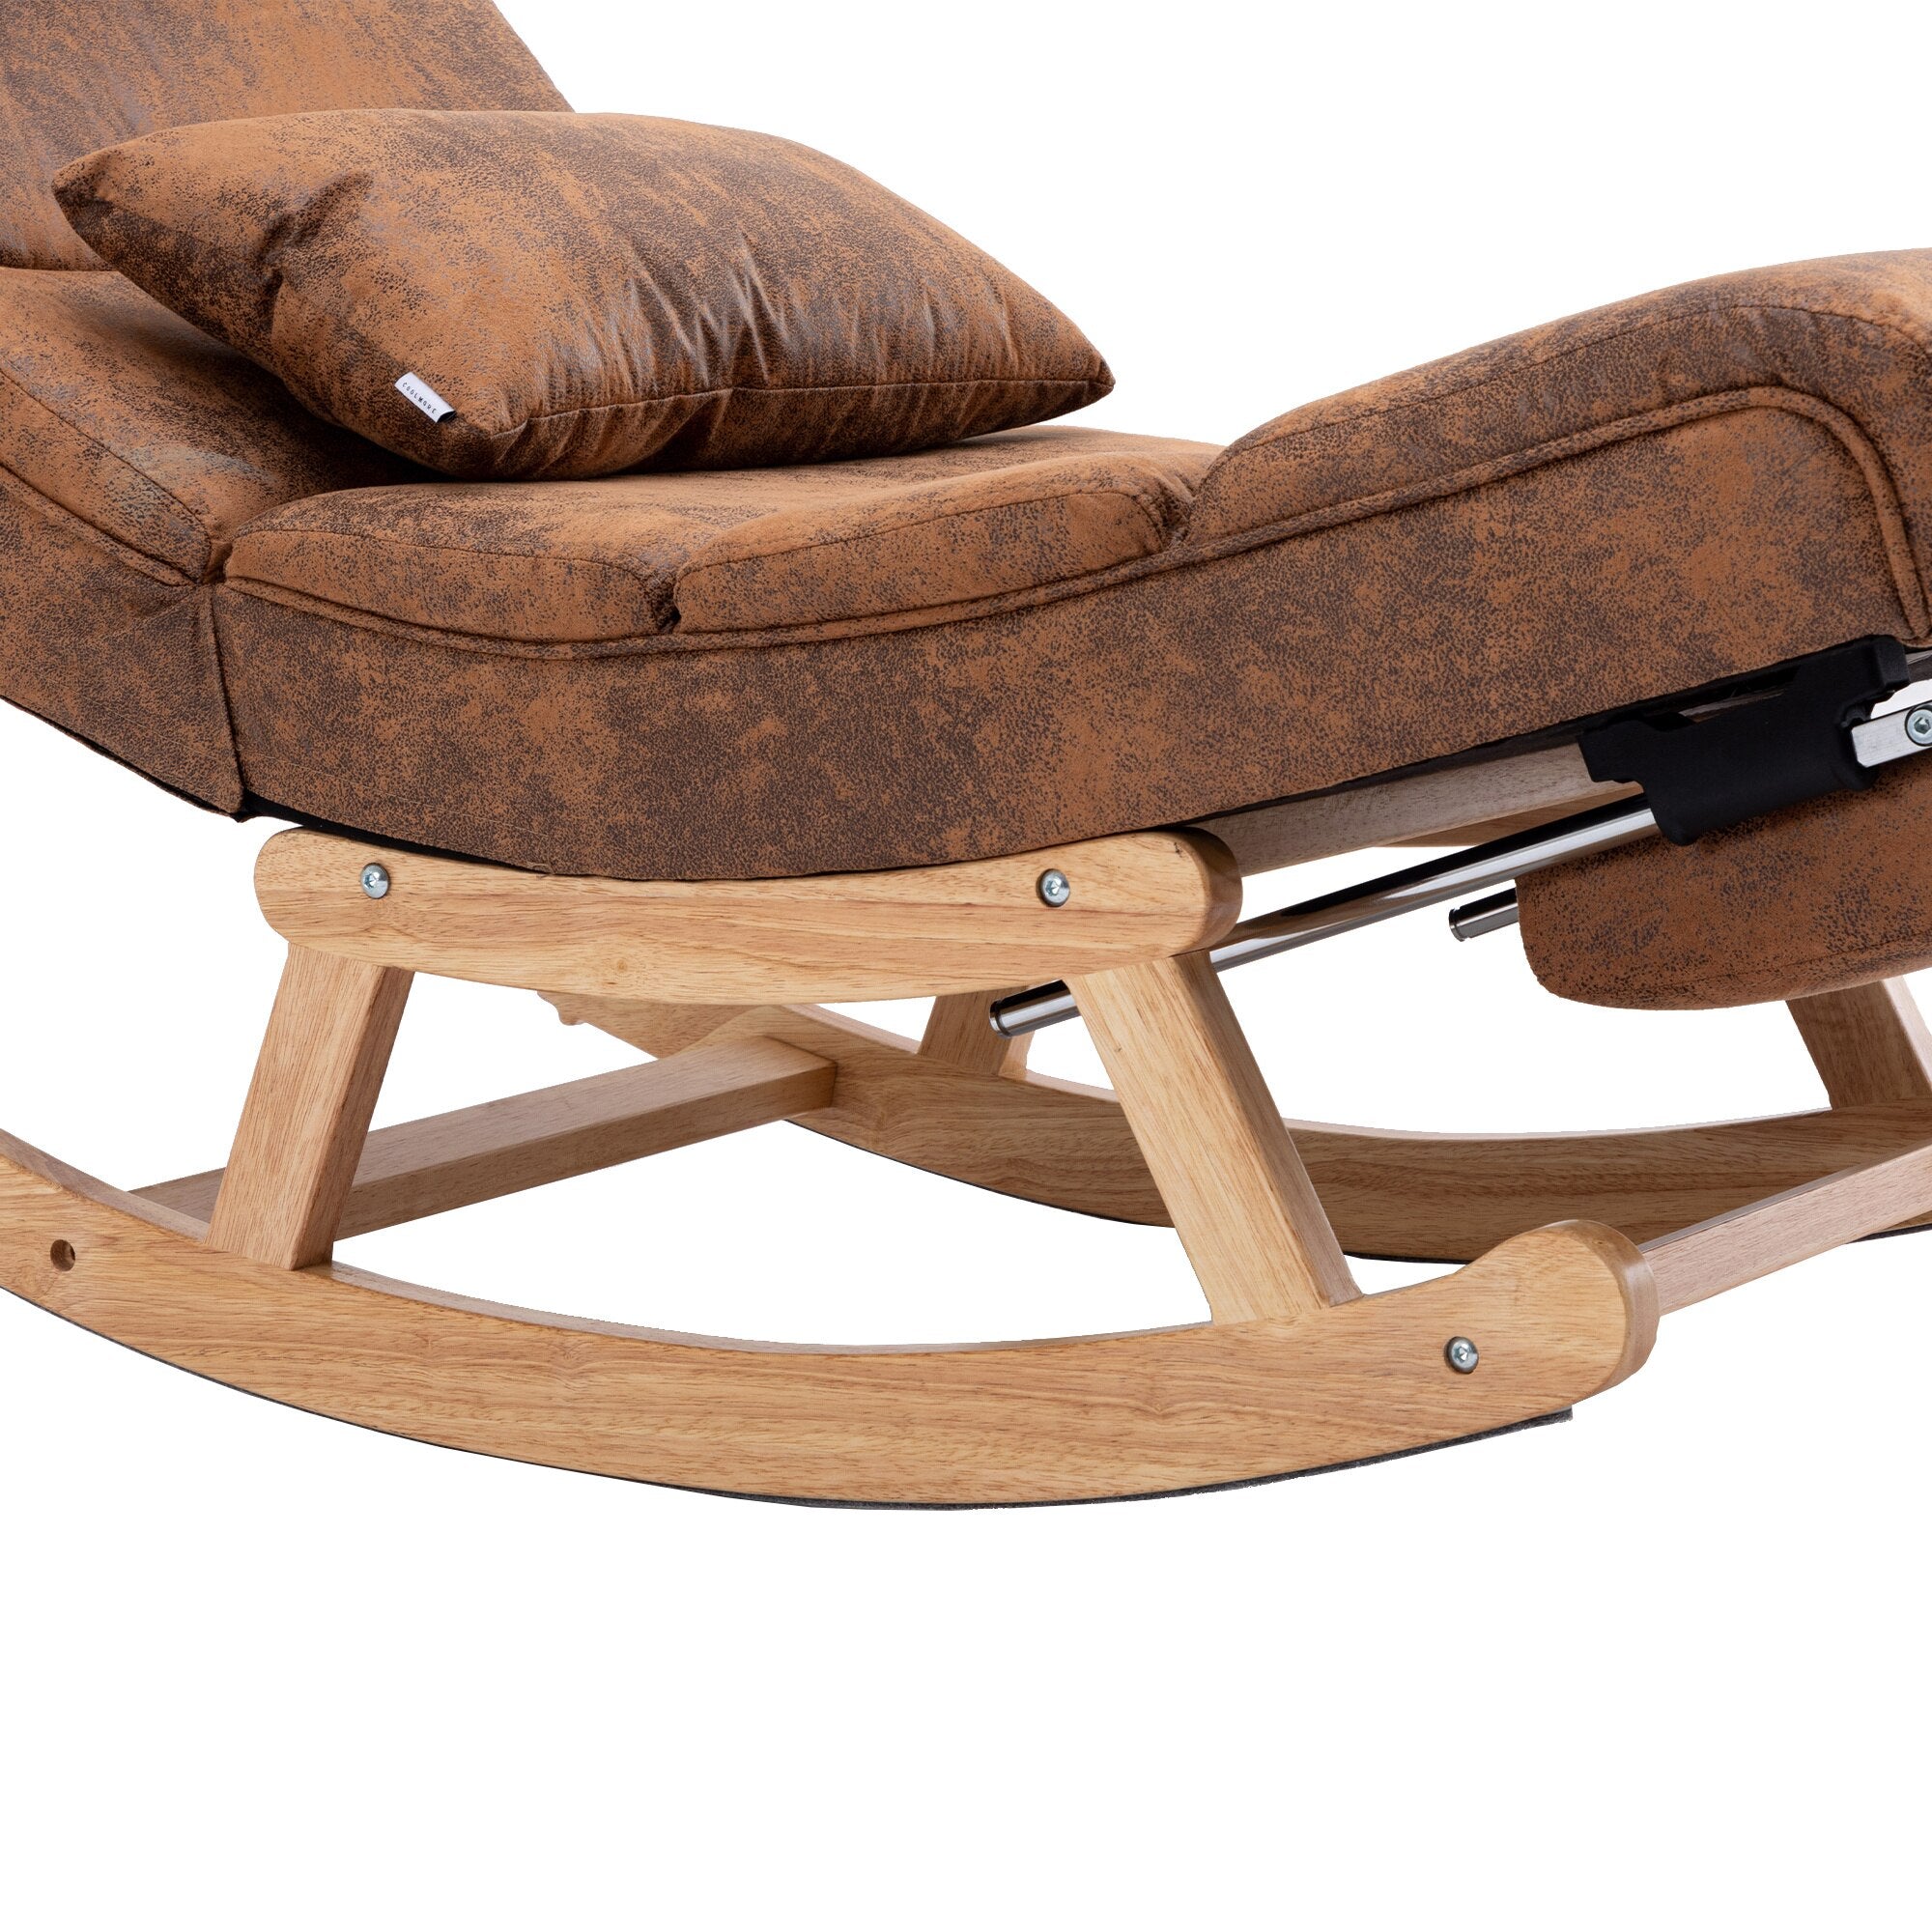 Homio Decor Living Room Modern Mid-Century Rocking Chair